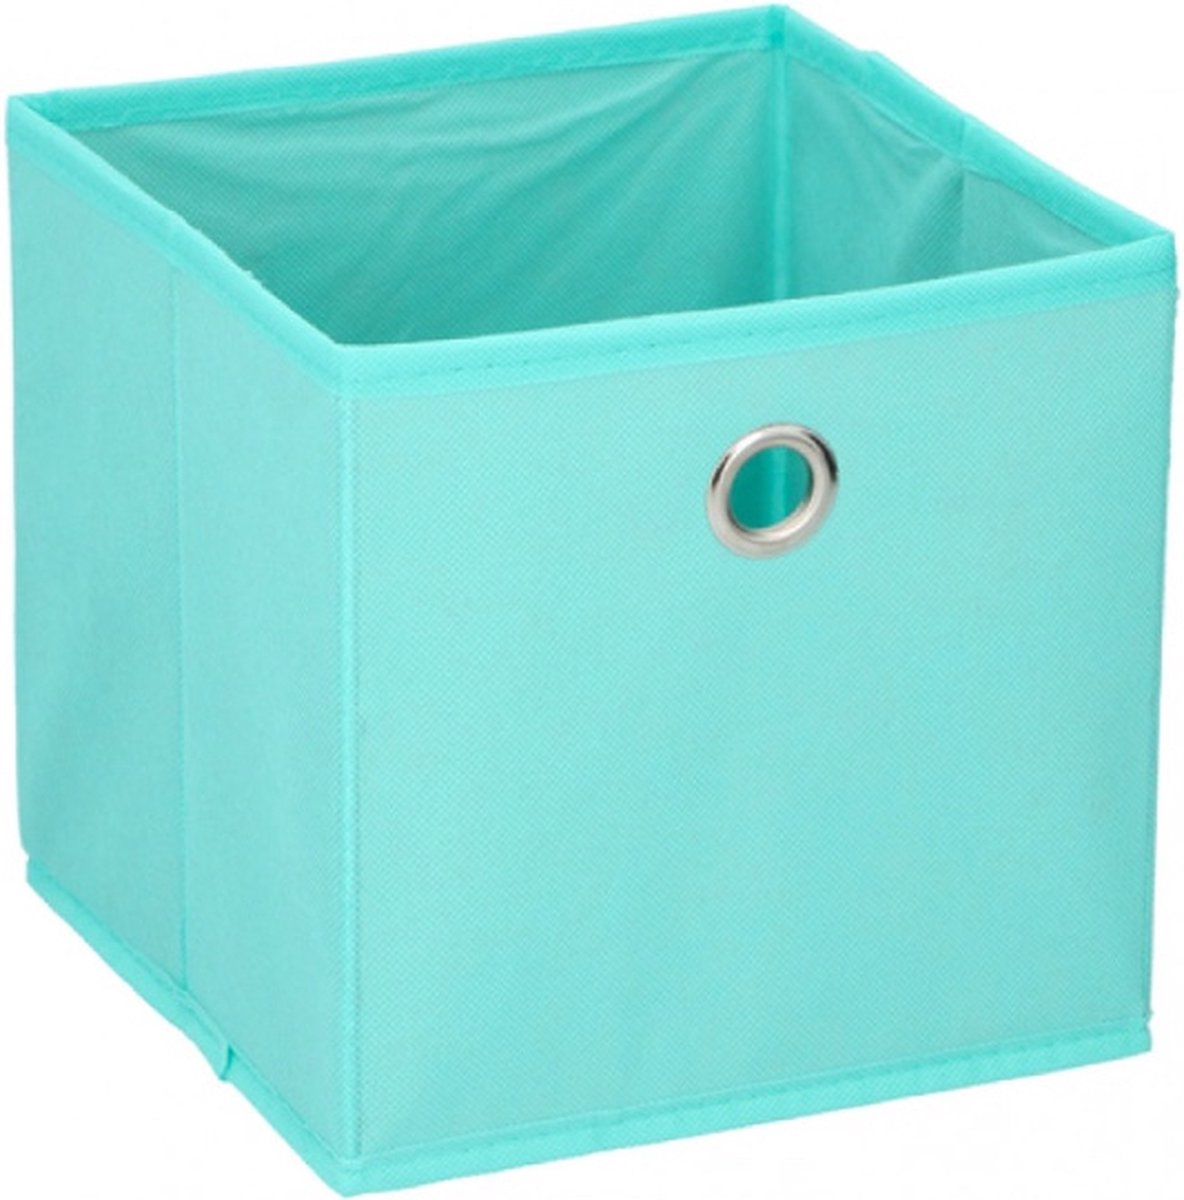 Opbergdoos - Opbergbox - Turquoise - 20x20 cm - Opbergboxen - Organizer - Organizer Kast